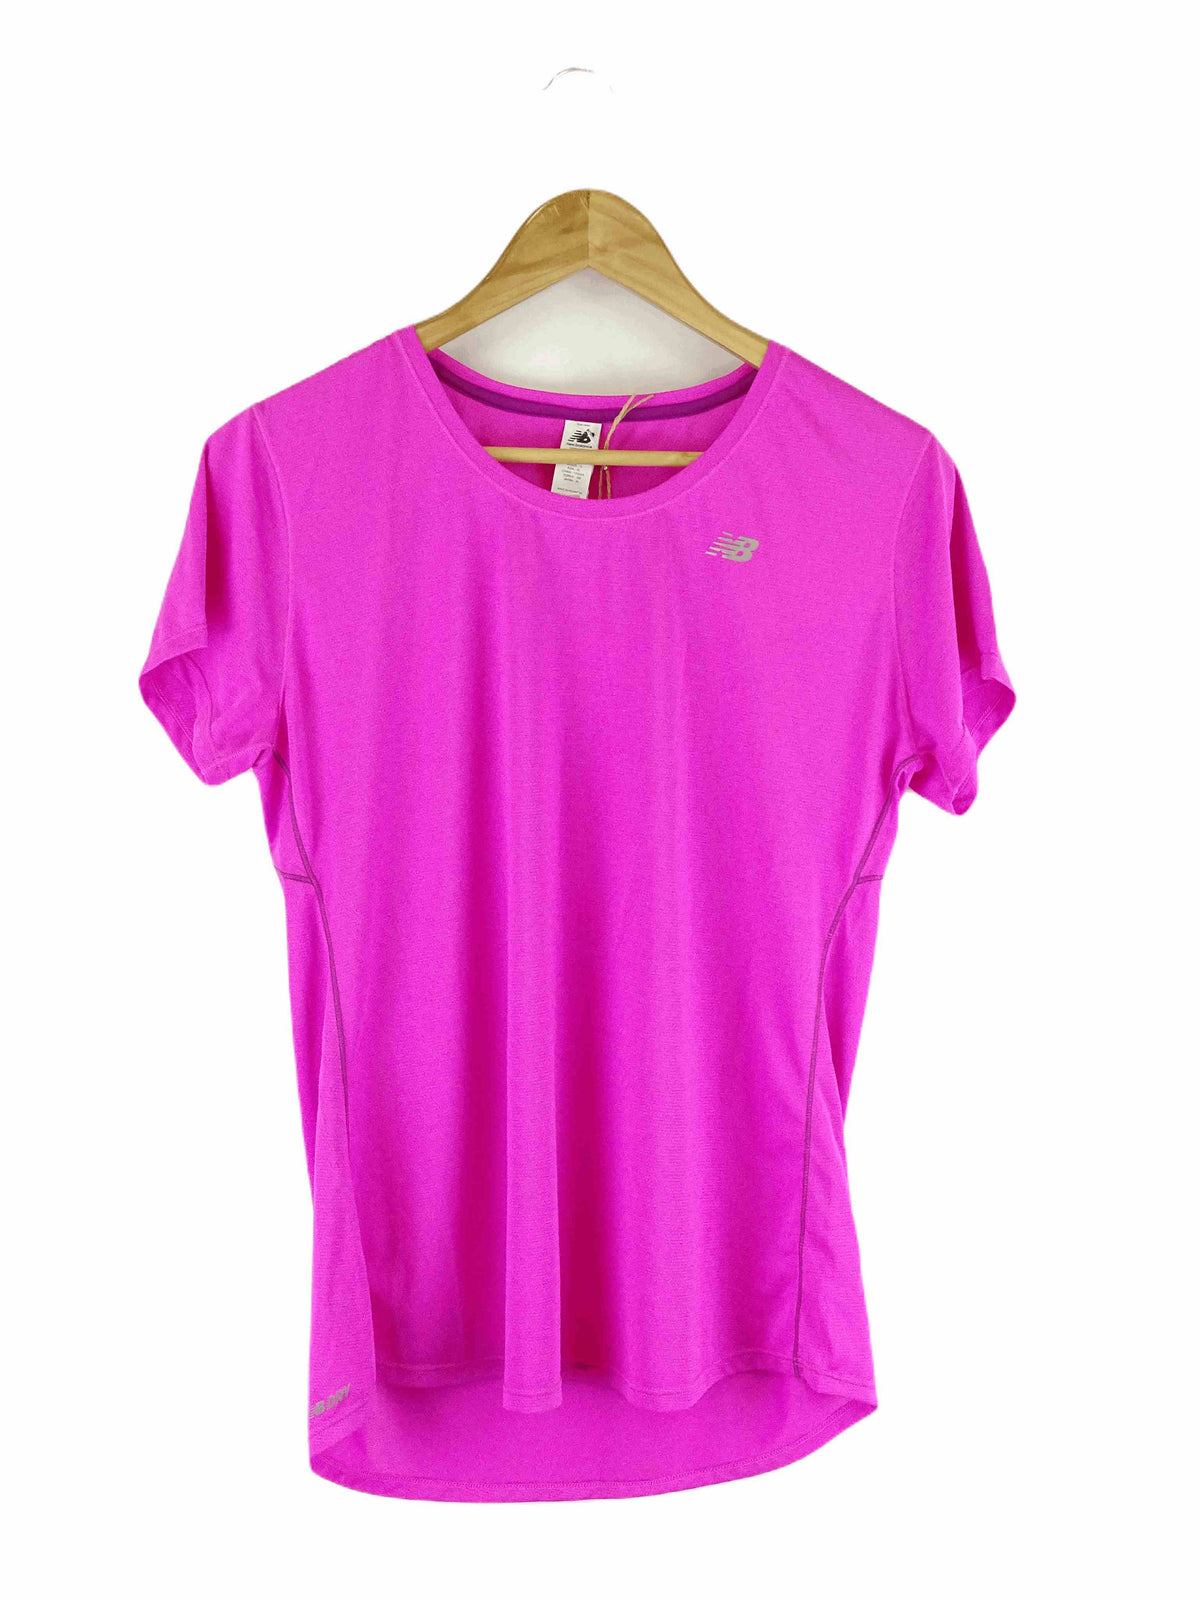 New Balance Pink T-shirt L